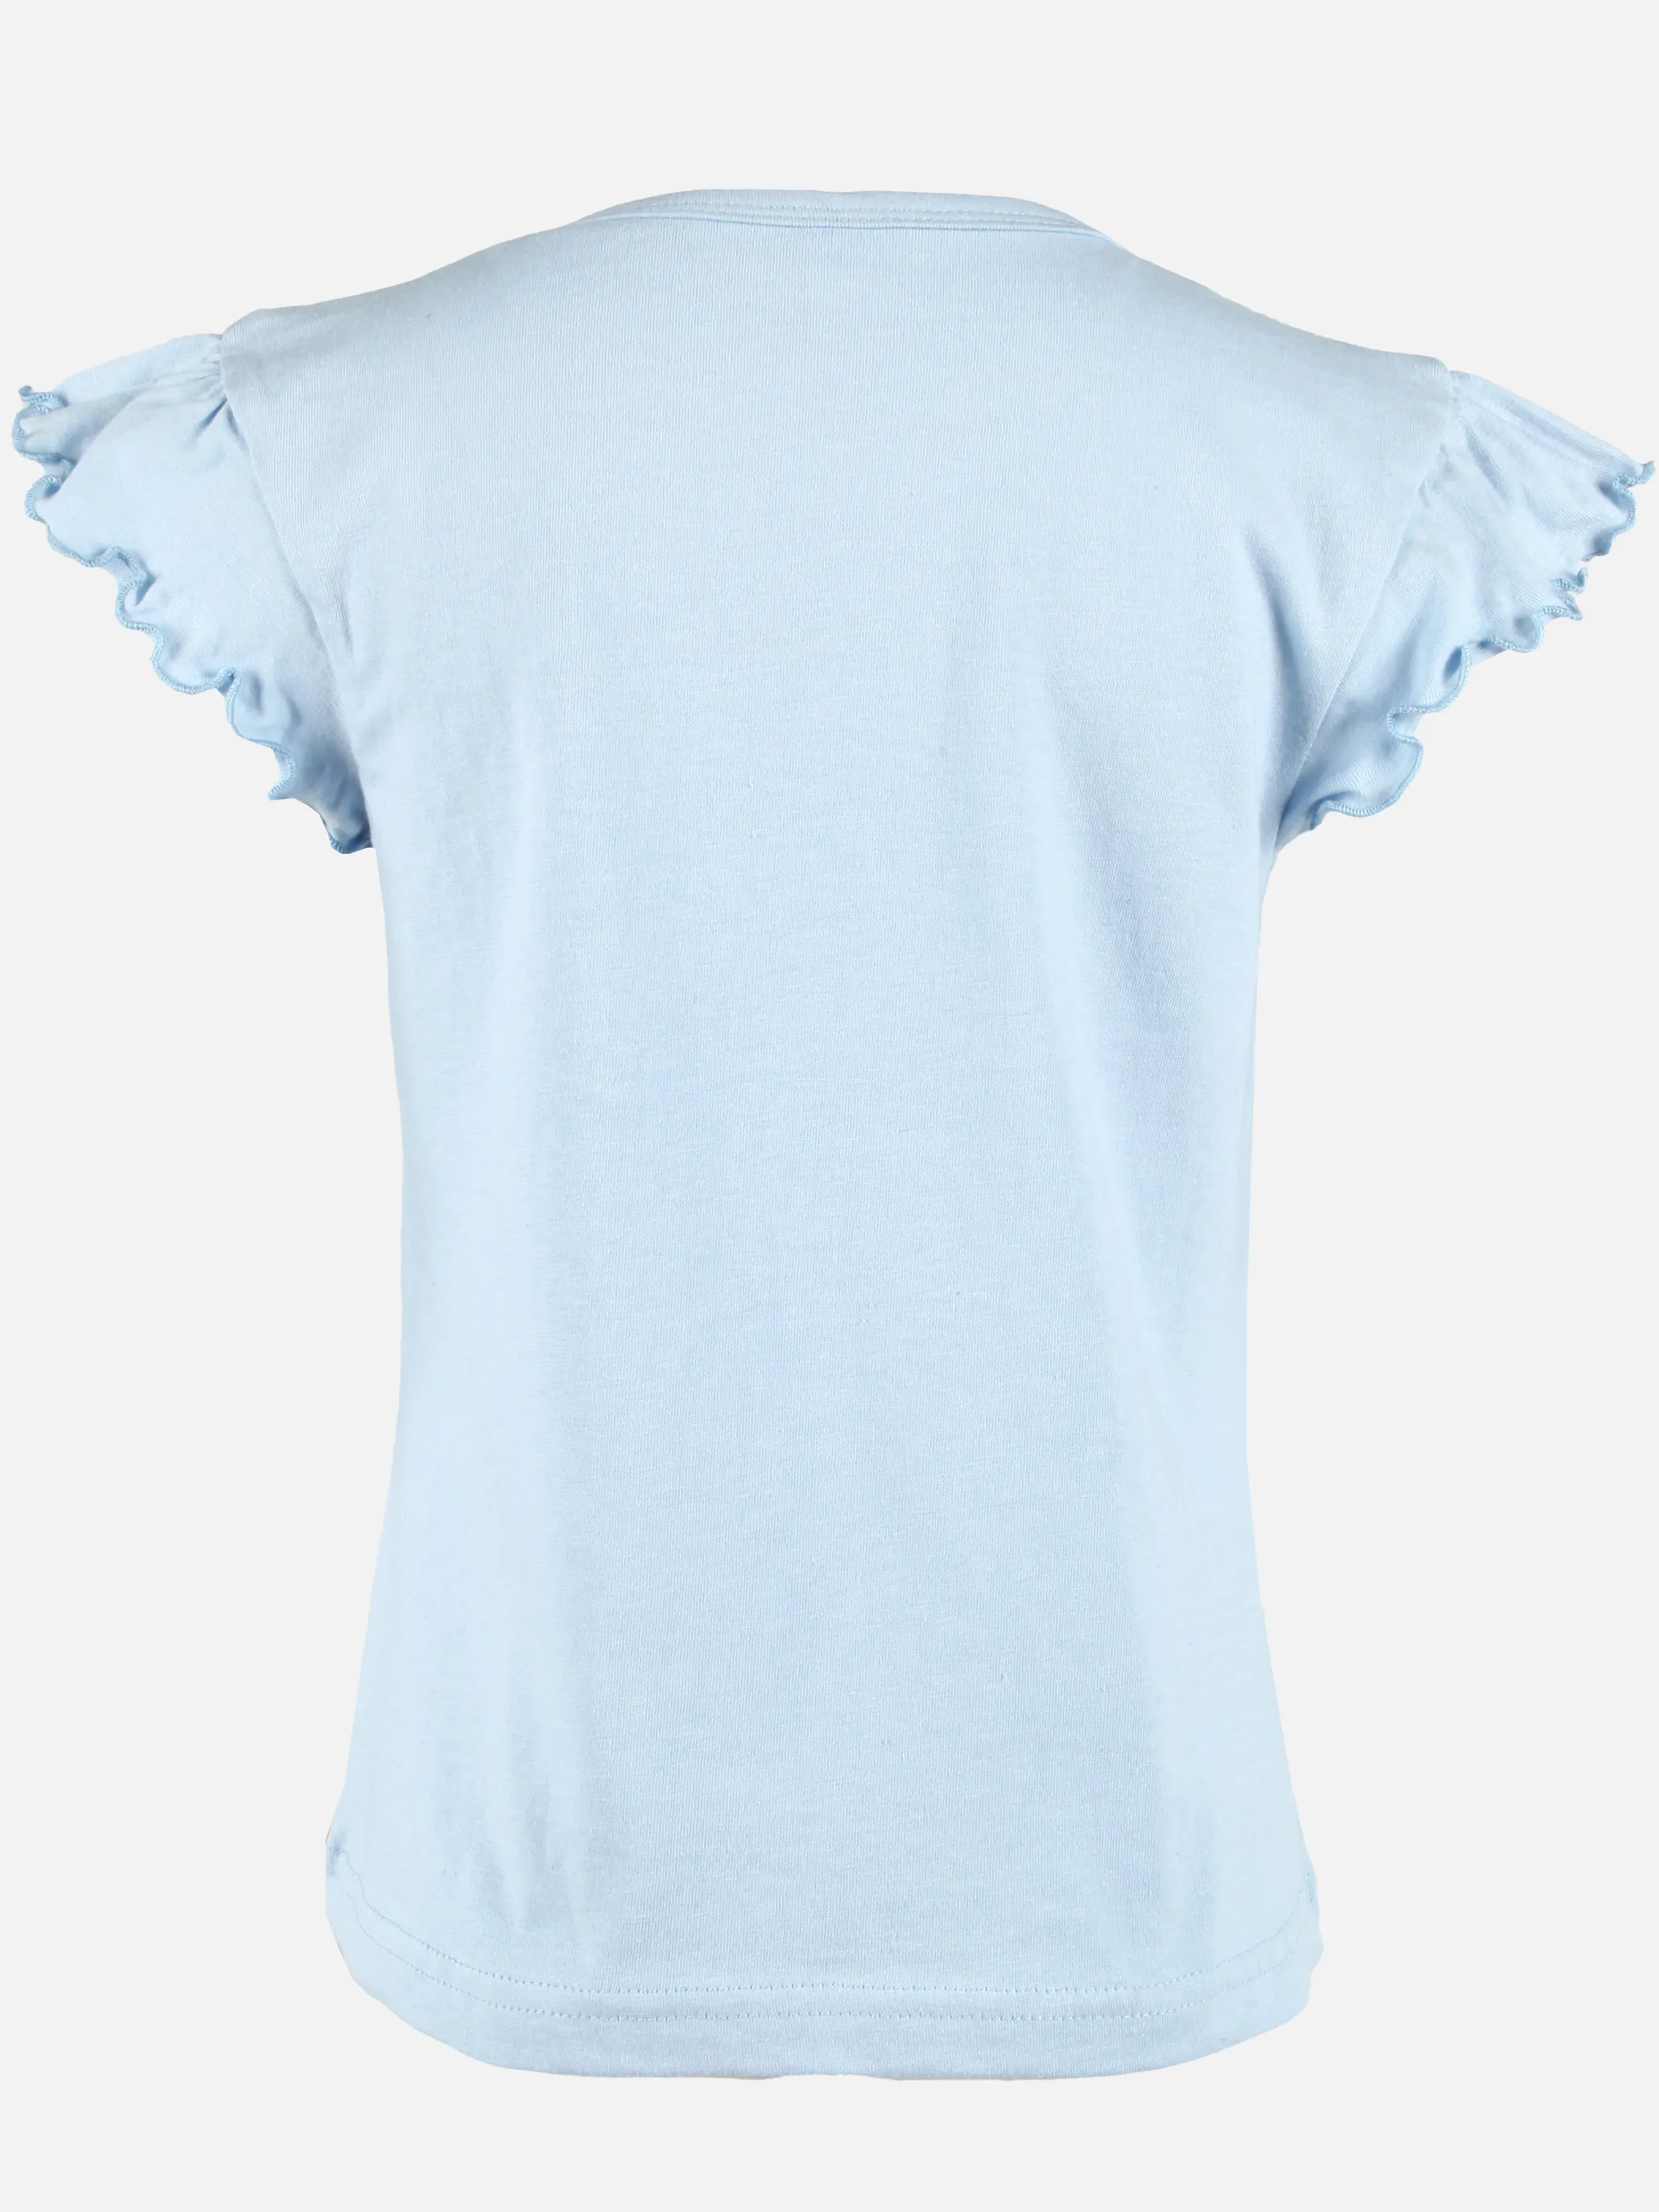 Frozen KM T-Shirt mit Frozen Frontdruck in hellblau Blau 892449 HELLBLAU 2